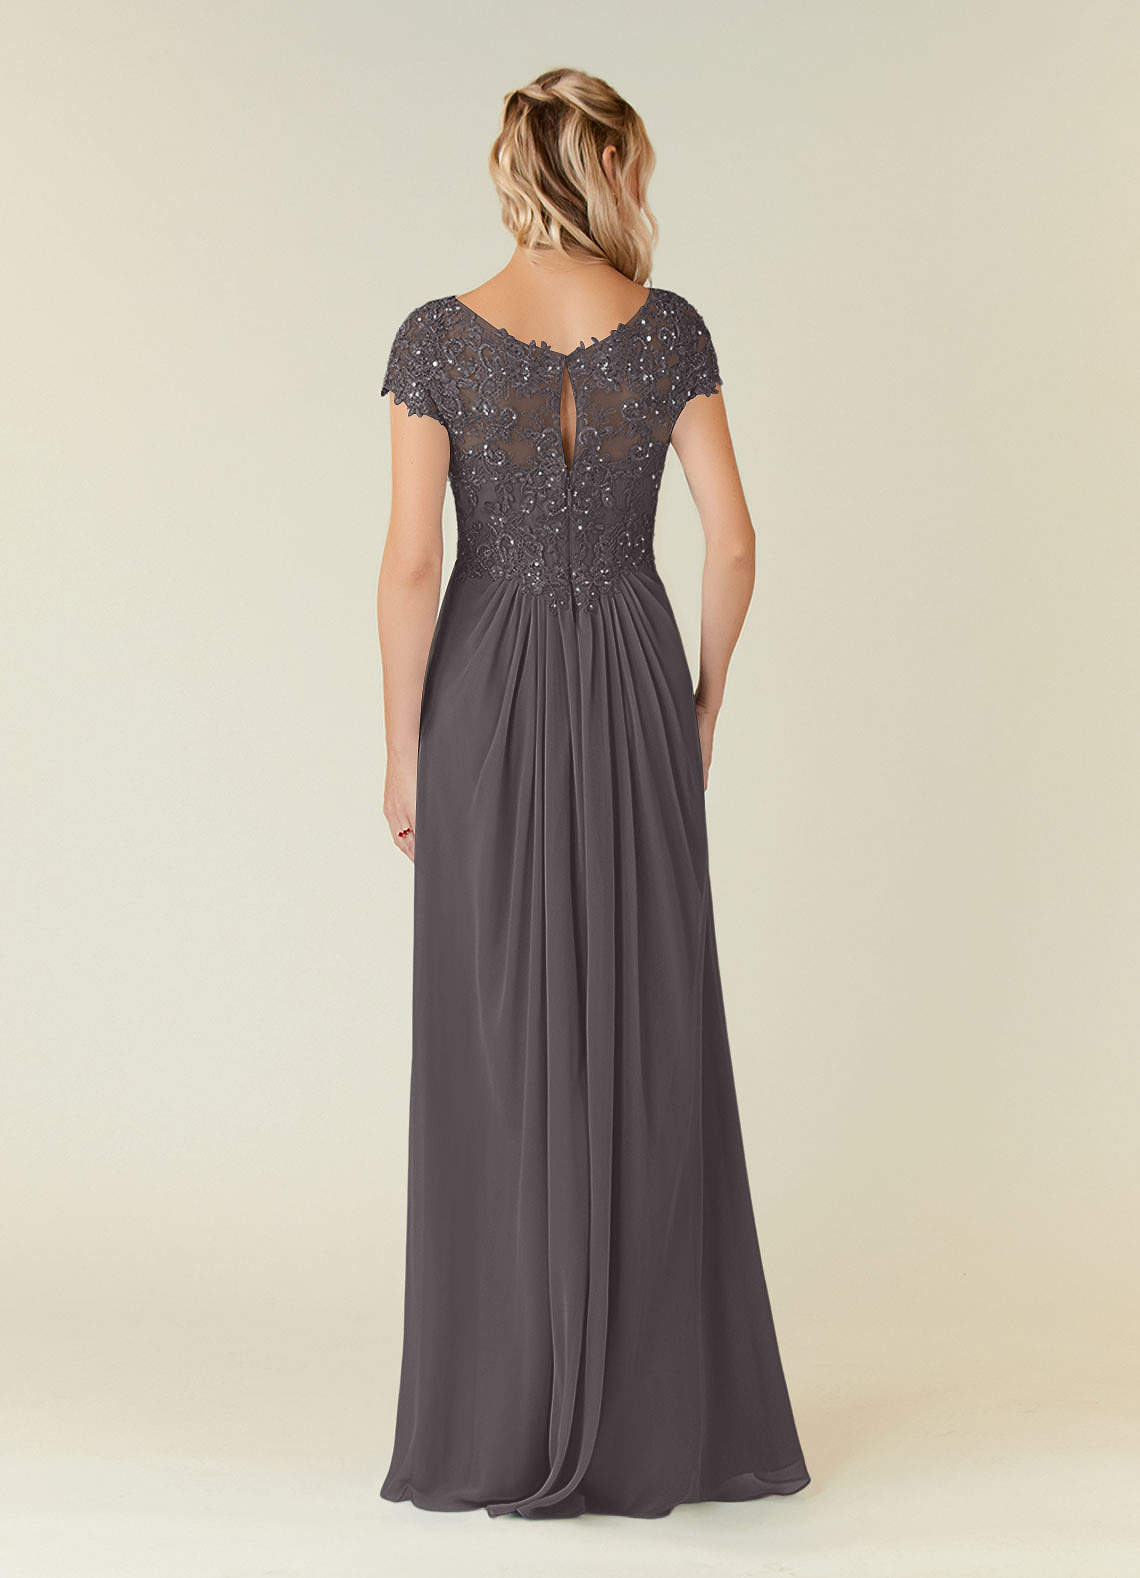 Azazie Jet Mother of the Bride Dresses A-Line Sequins Chiffon Floor-Length Dress image1